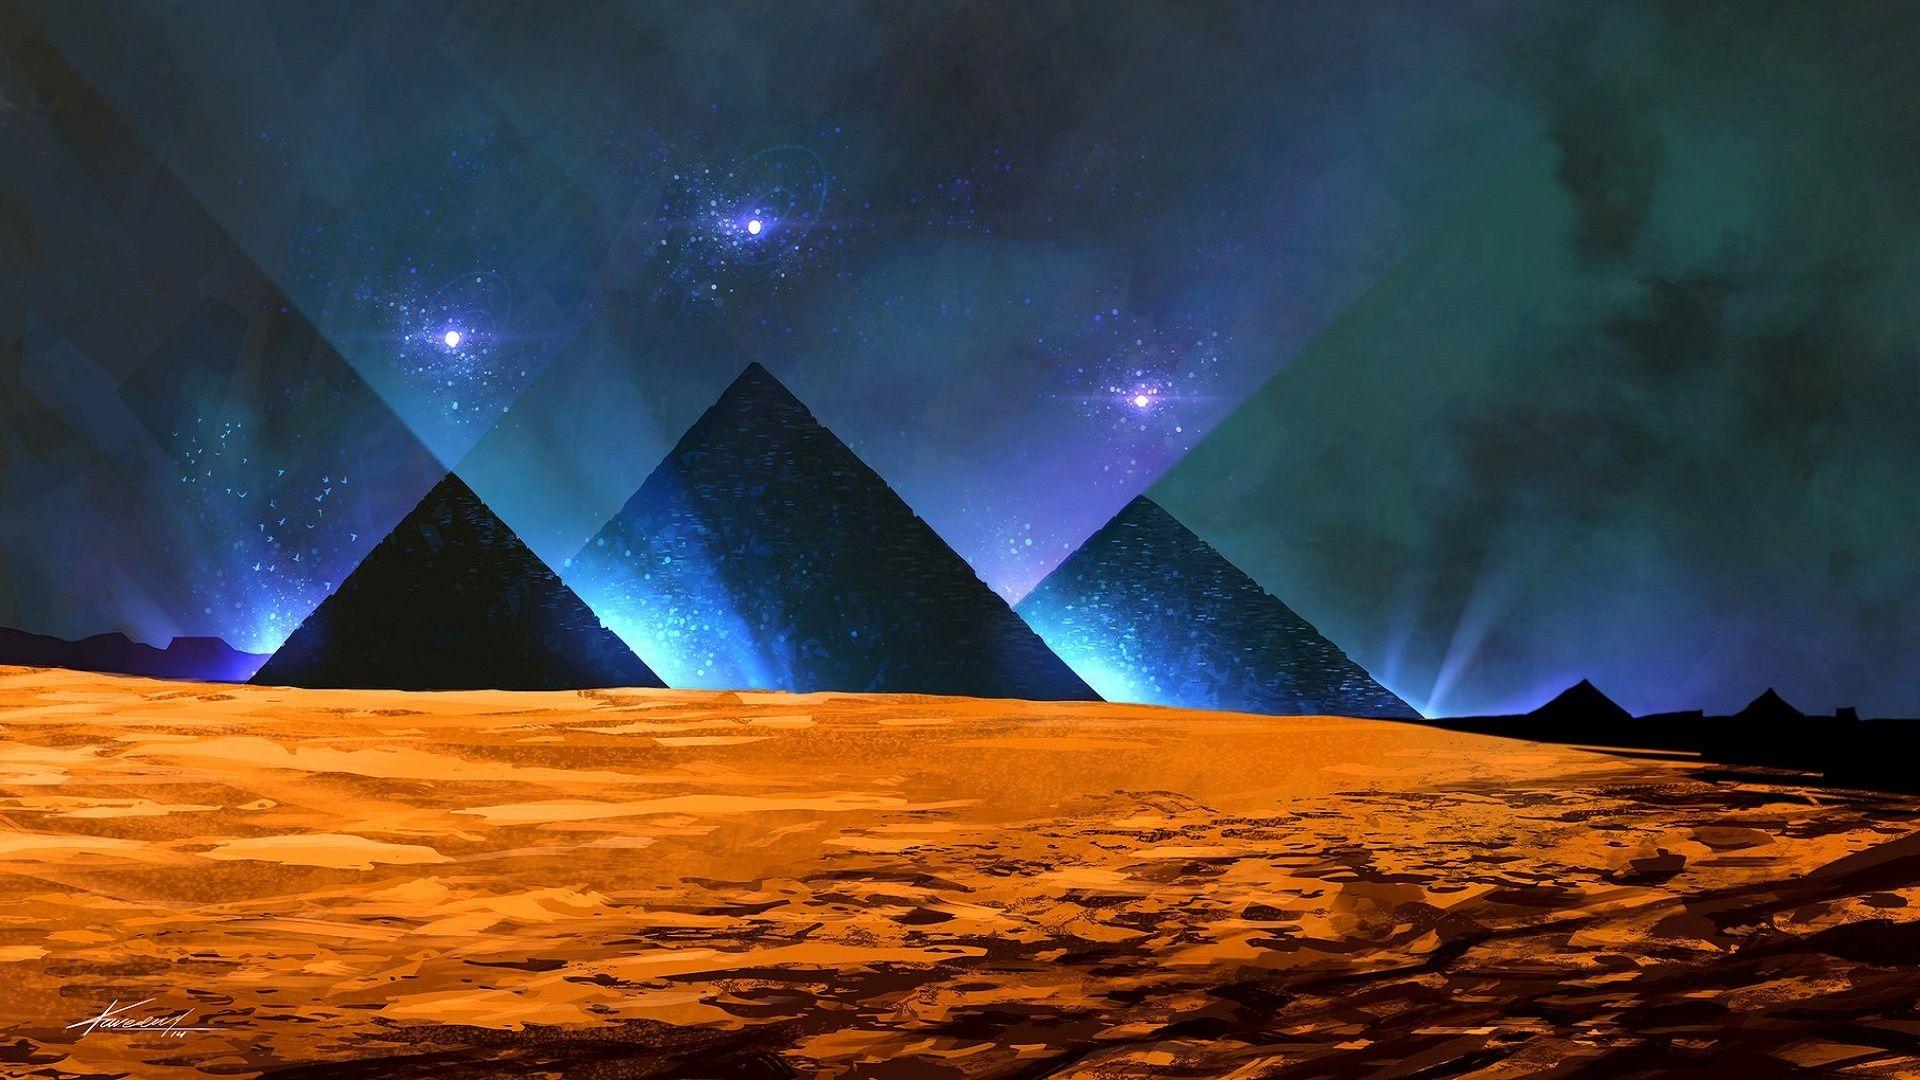 Desert, Pyramid, Night, Pyramastar, Star, Egypt Desert